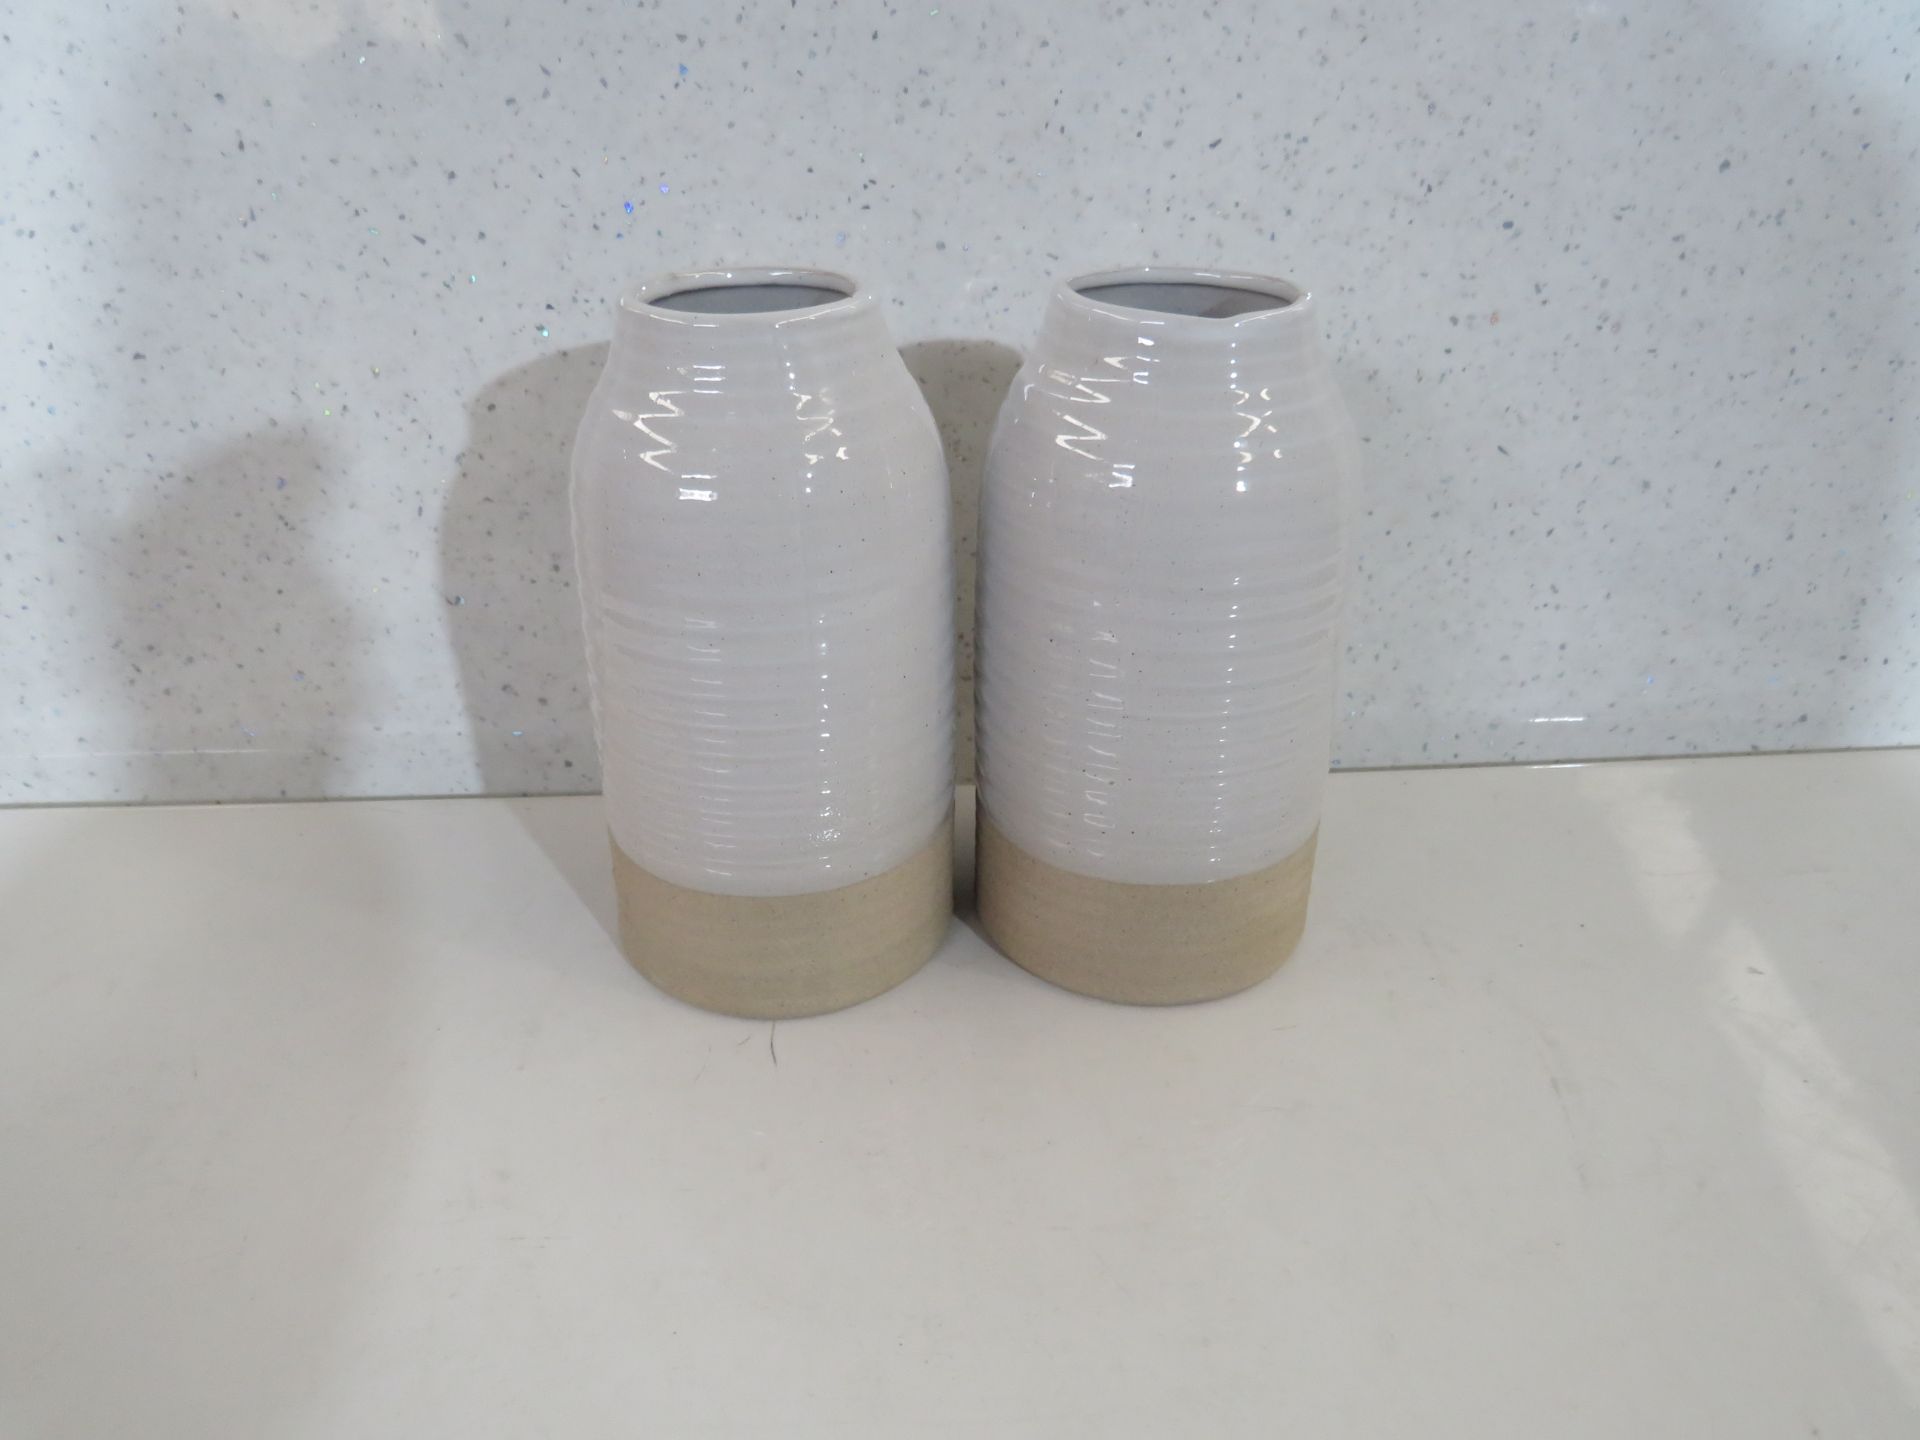 6x Sass & Belle - Rustic White Half Glazed Vase - All Good Condition.